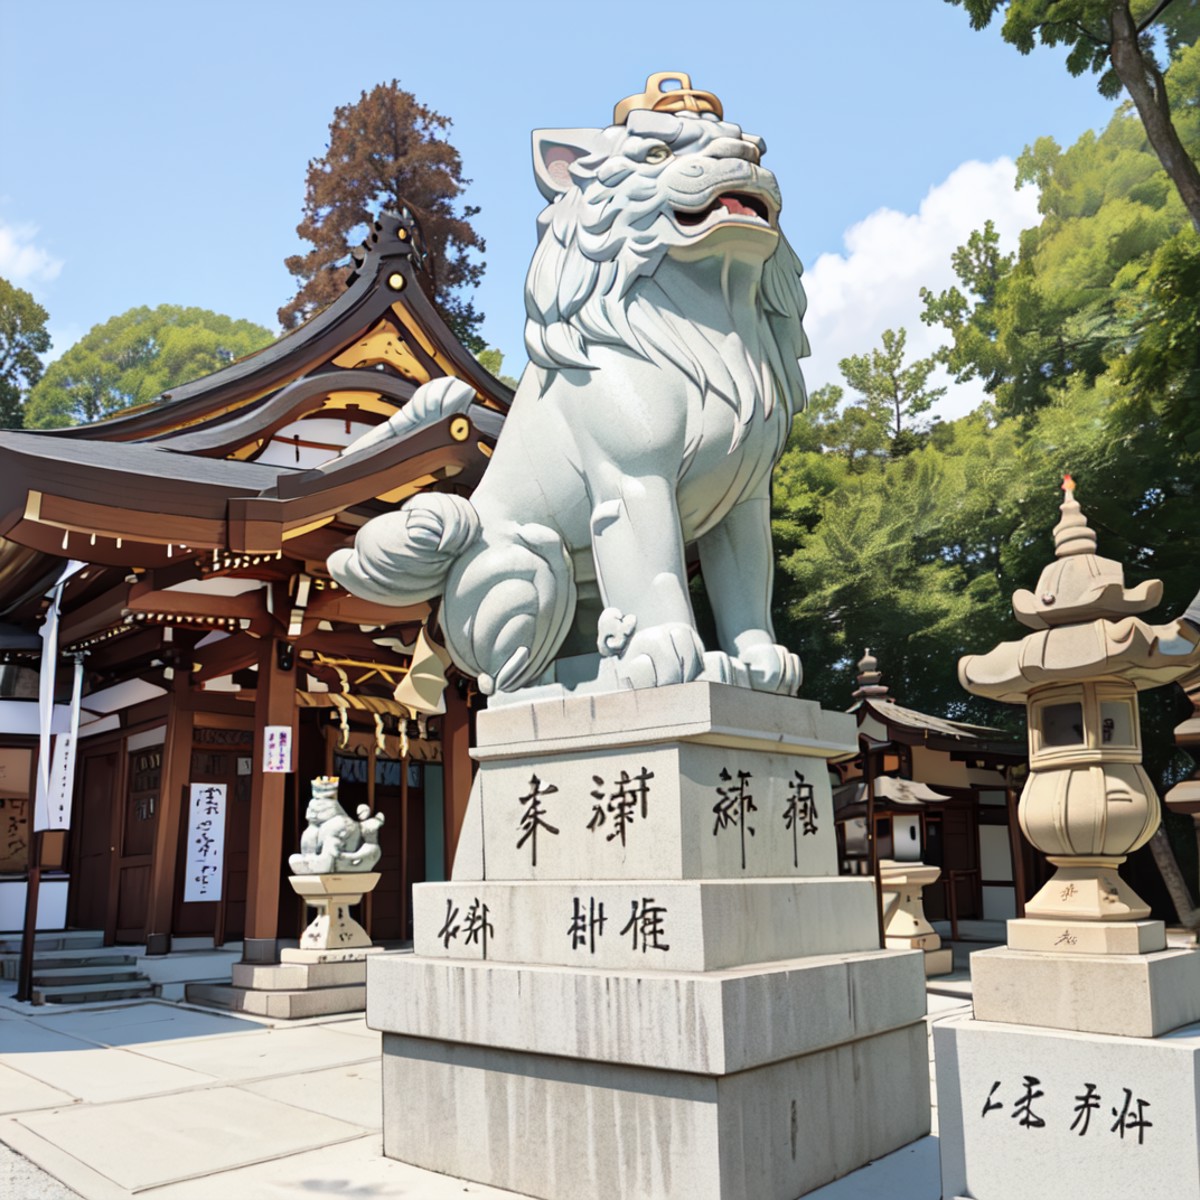 best quality, ultra-detailed, illustration,
komainu, jinzya, statue, shrine, outdoors, tree, stairs, scenery, real world l...